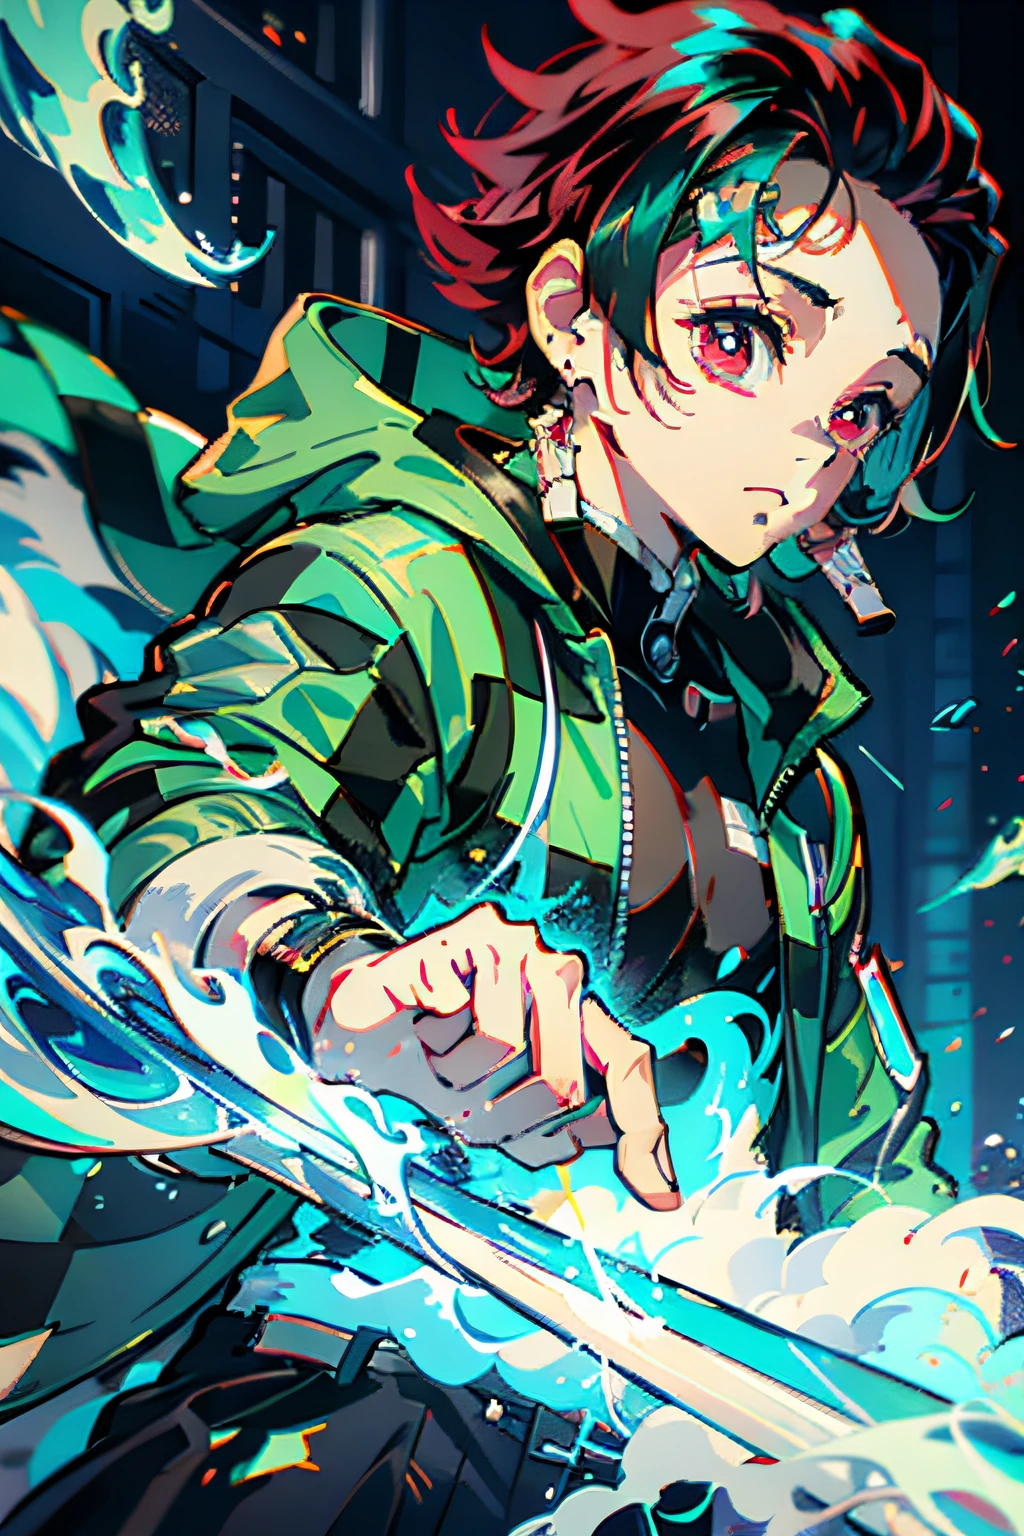 tanjiro wearing light green cyberpunk jacket, blue sword, blue fire and aura around him, cyberpunk theme, 4k, ultra sharp